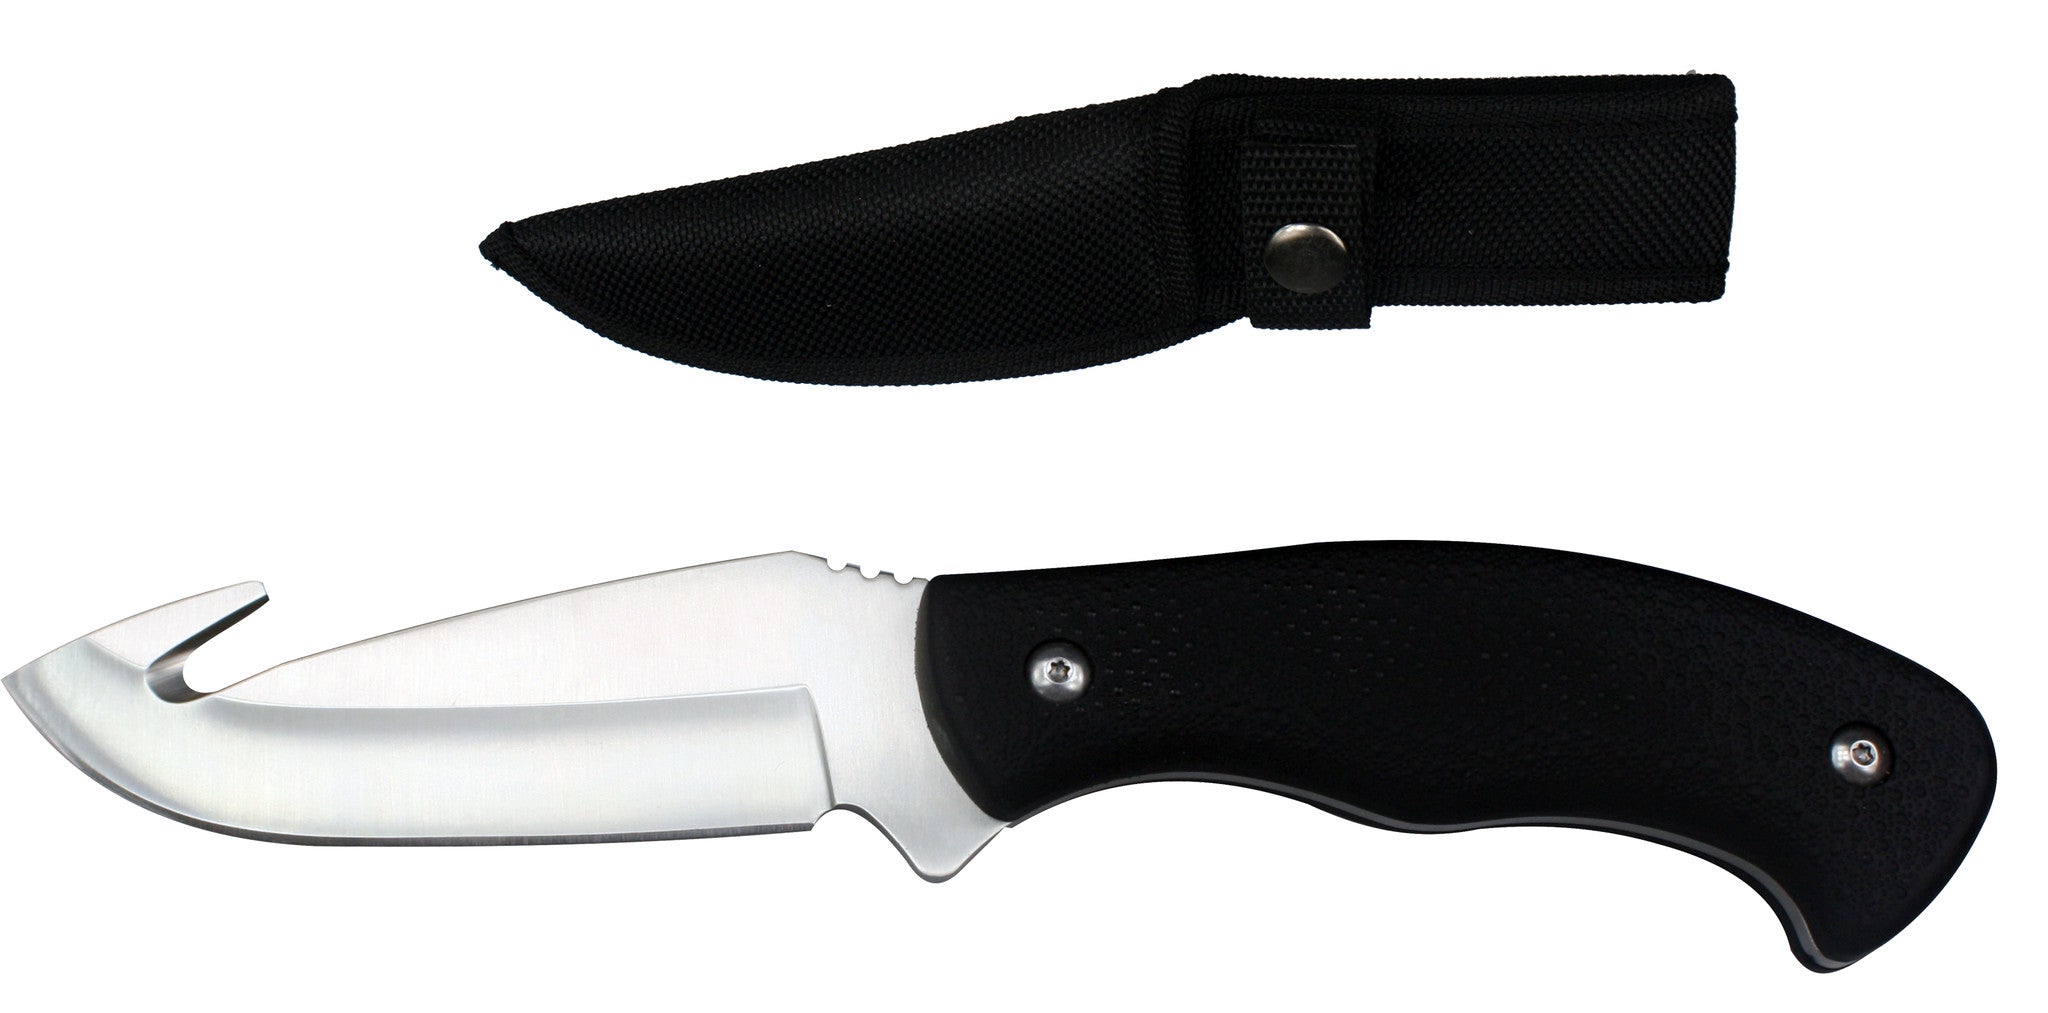 hunting knife, black knive, biltong knife, camping knife